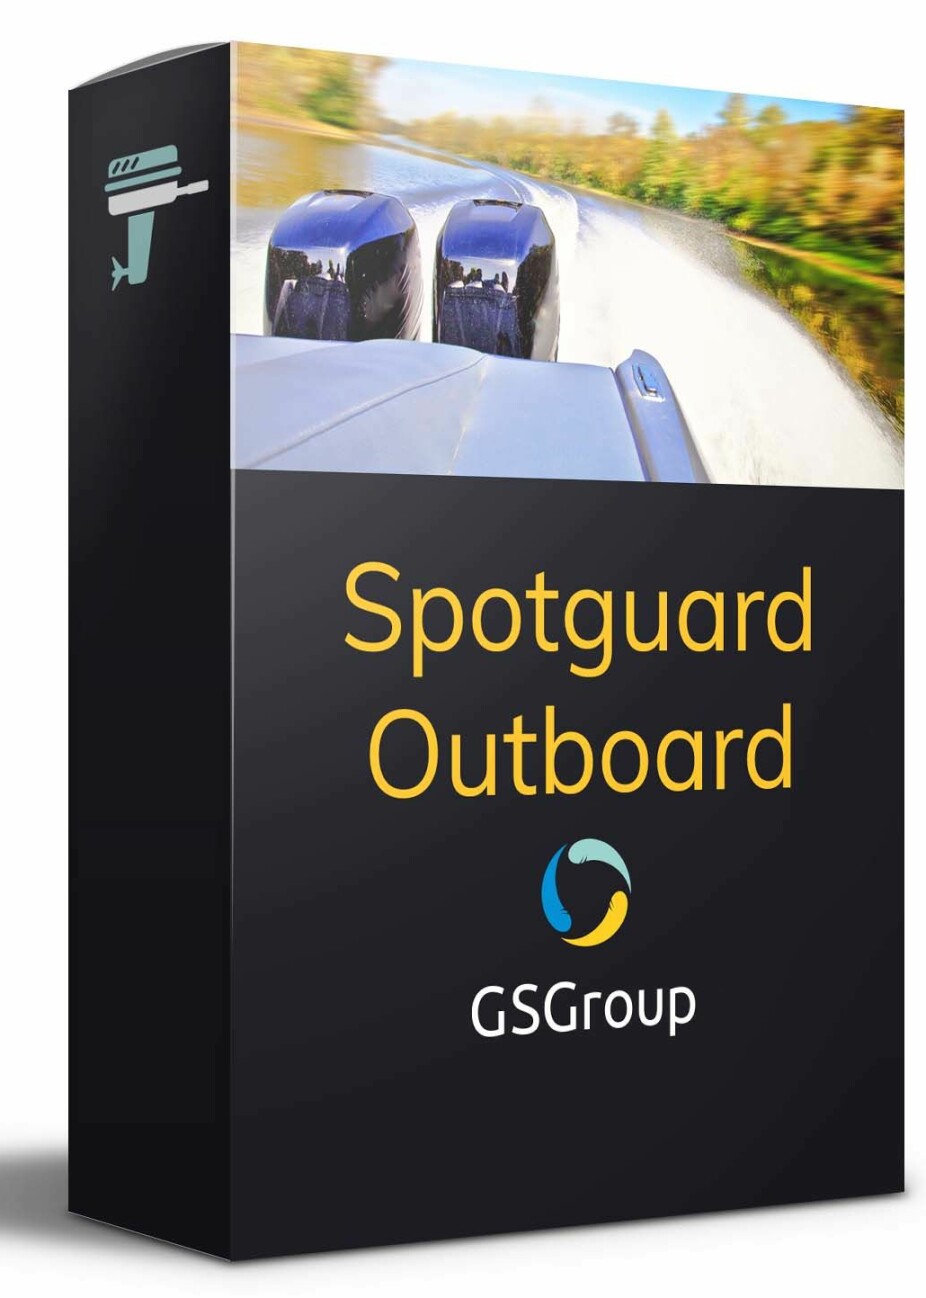 Spotguard Outboard